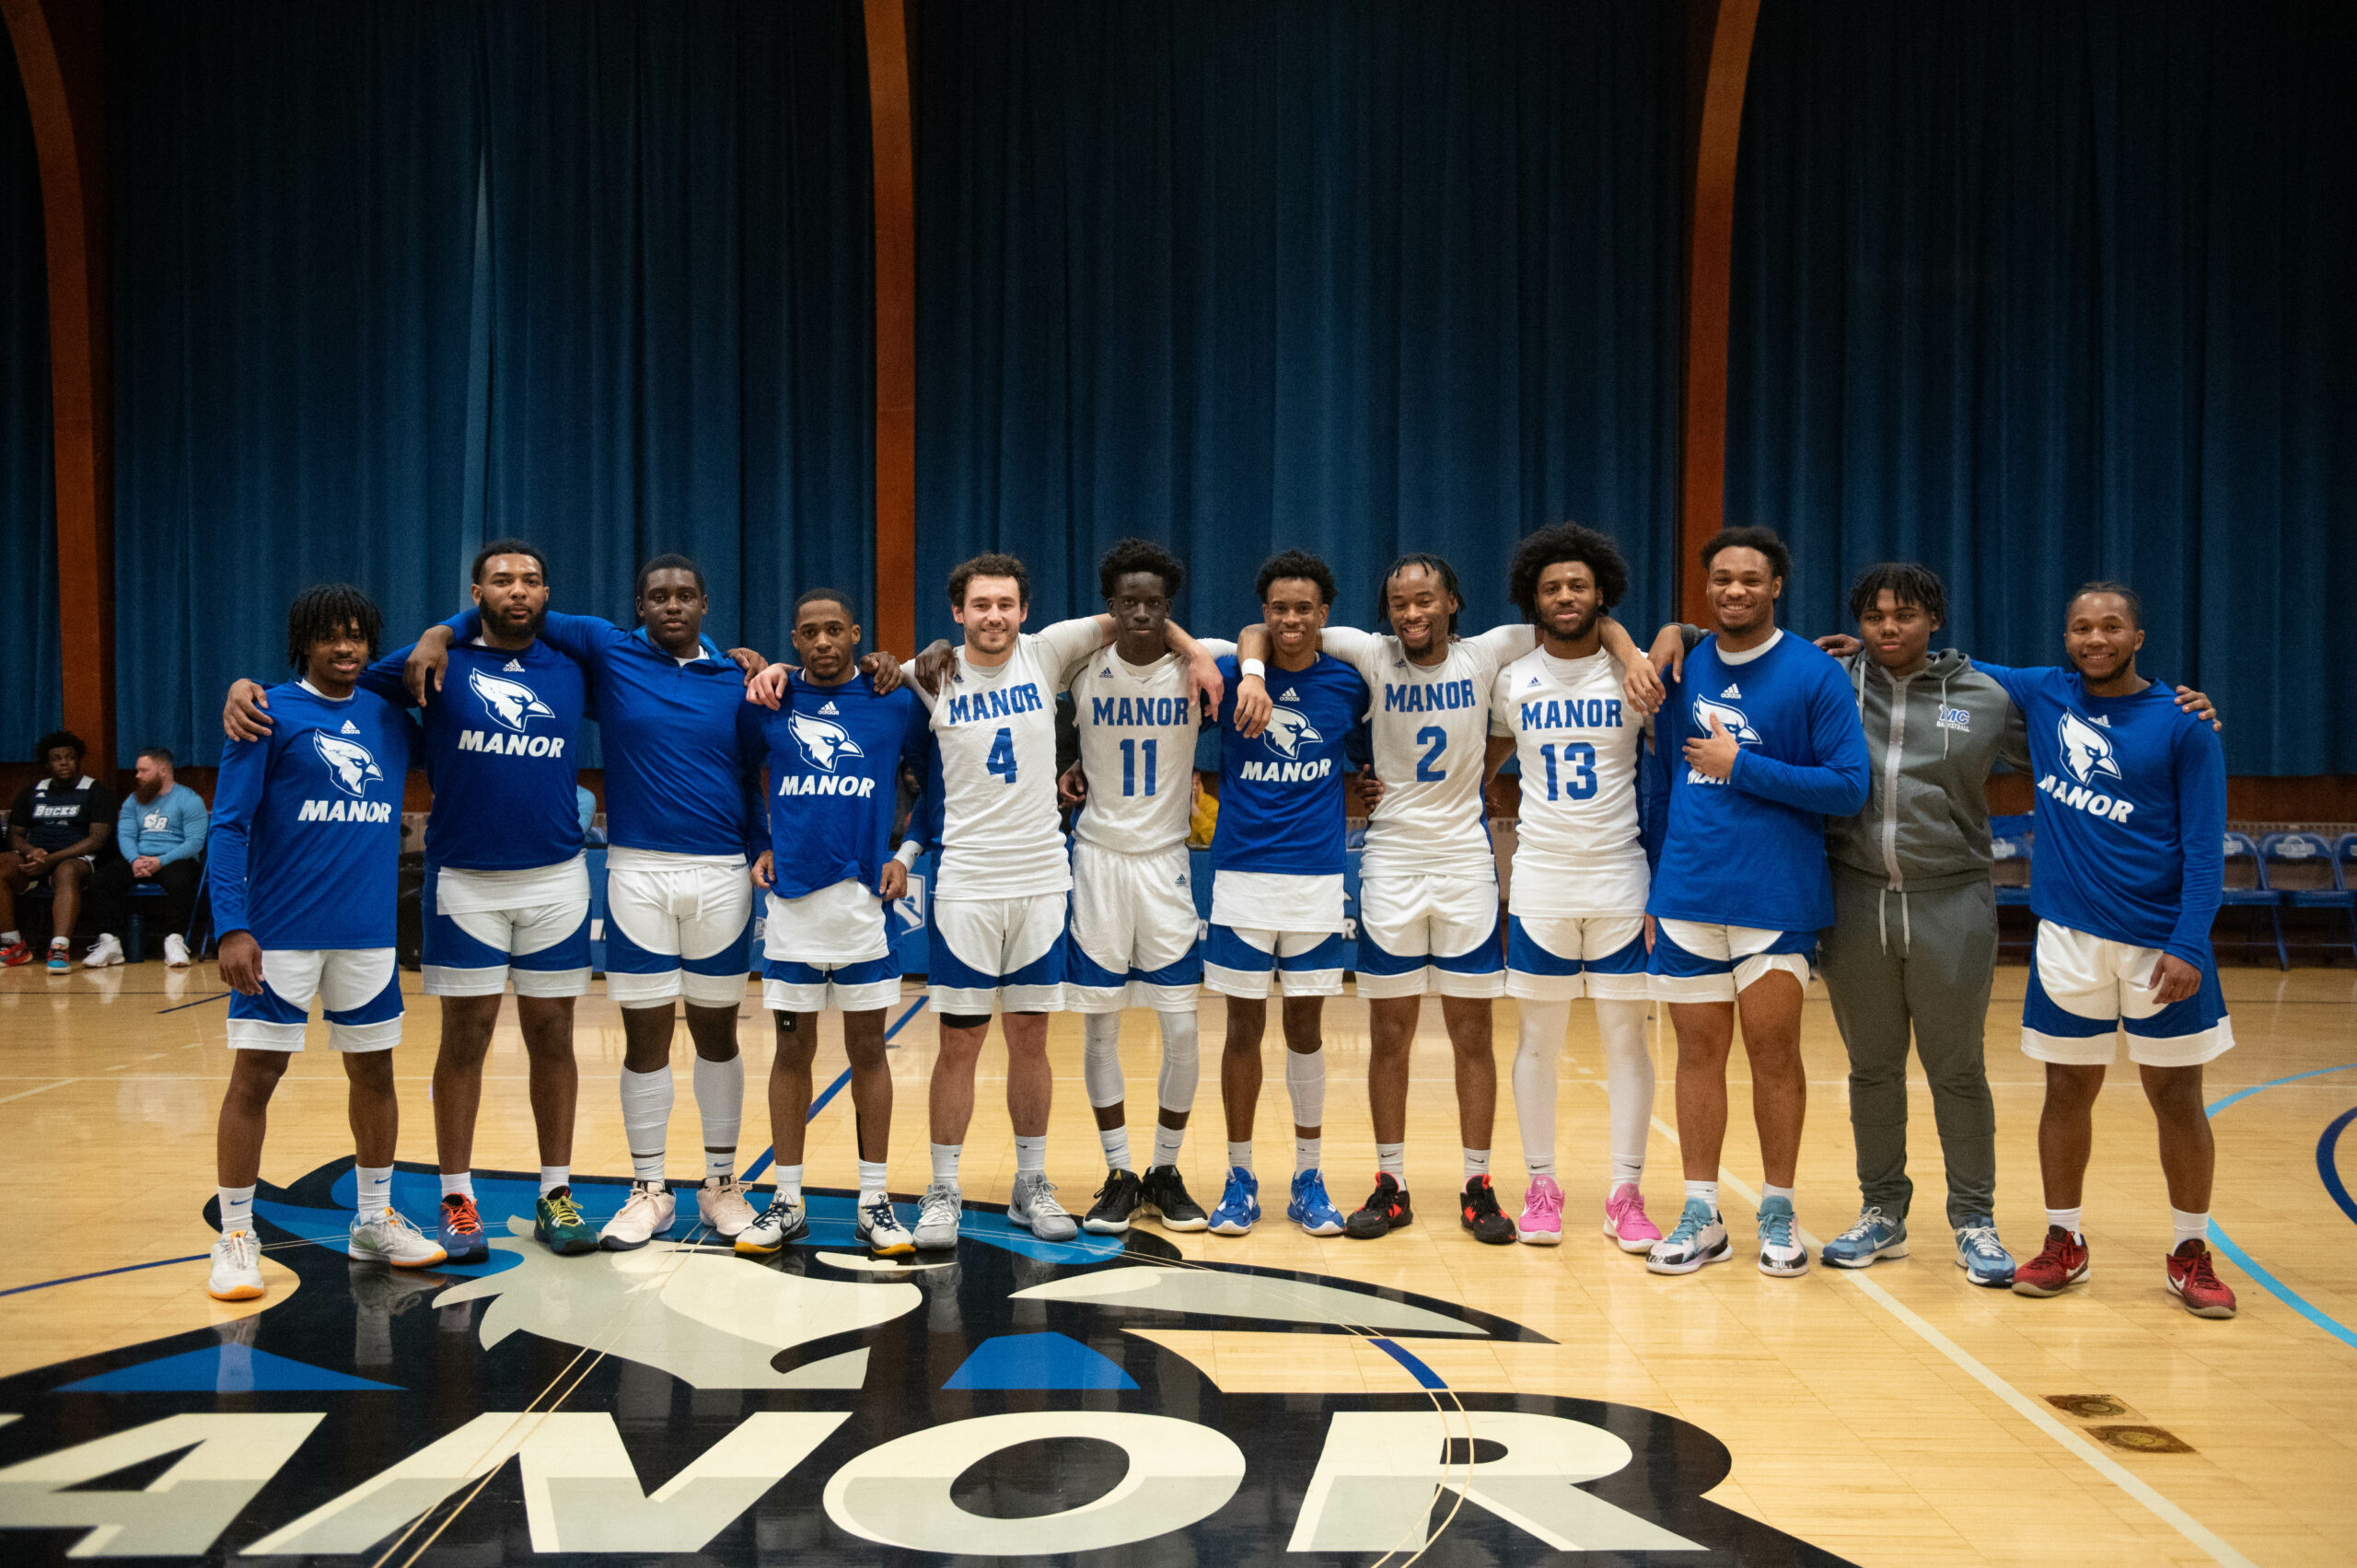 Manor College's Men's Basketball Team